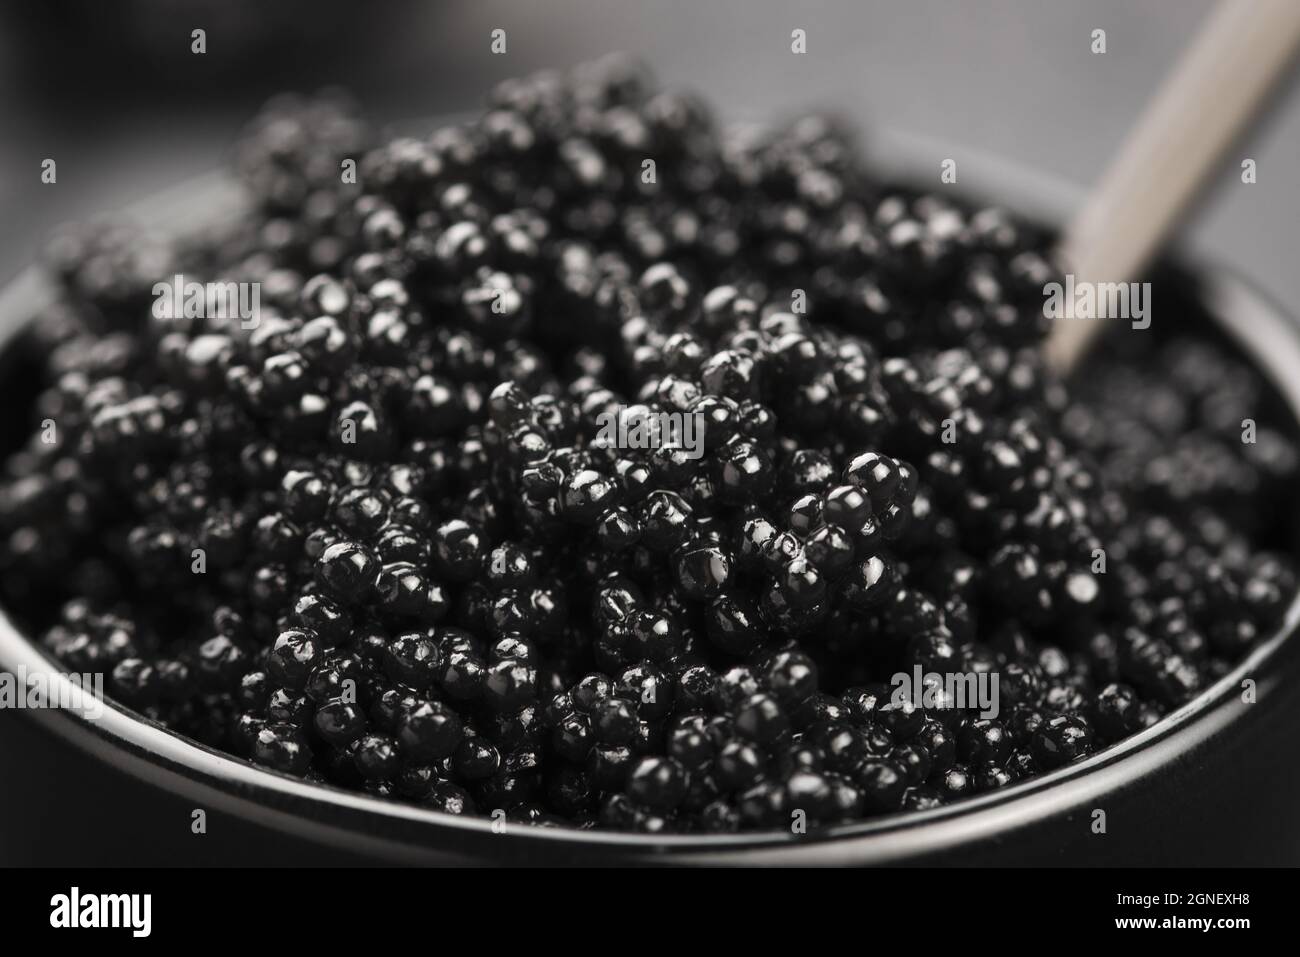 high angle black caviar. High quality and resolution beautiful photo concept Stock Photo